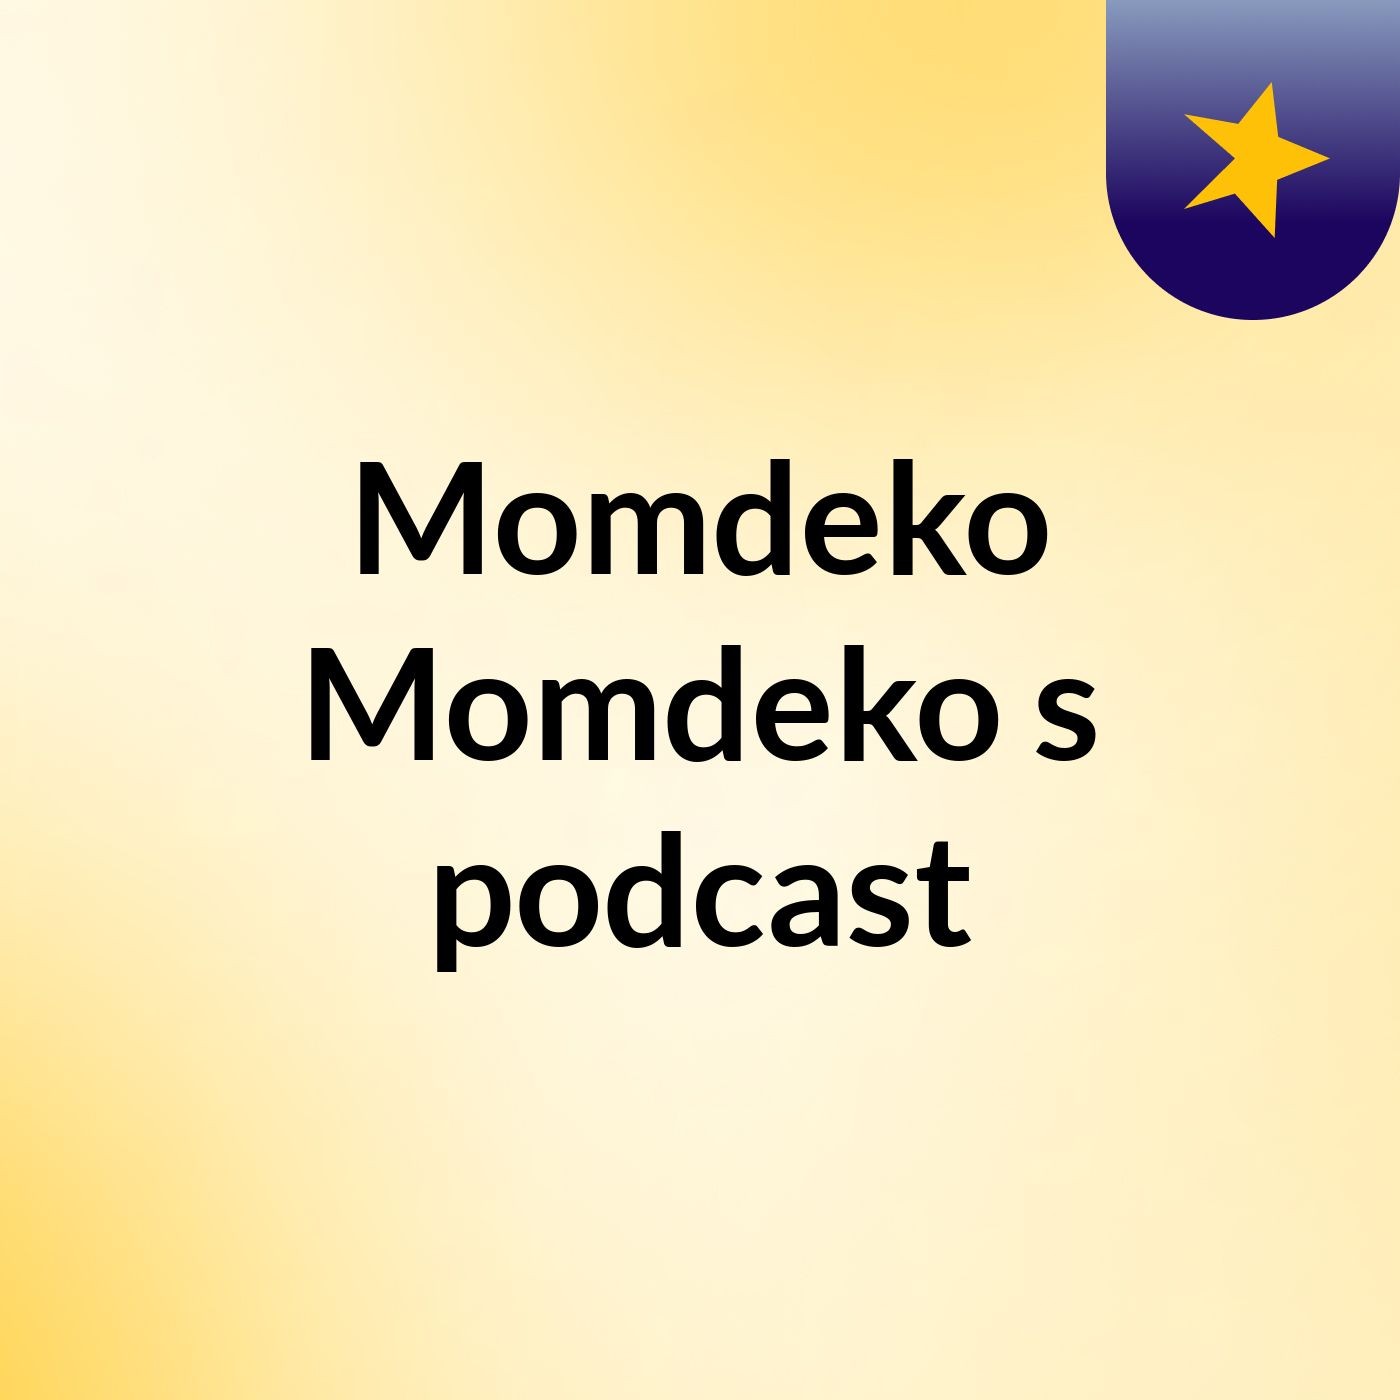 Episode 11 - Momdeko Momdeko's podcast